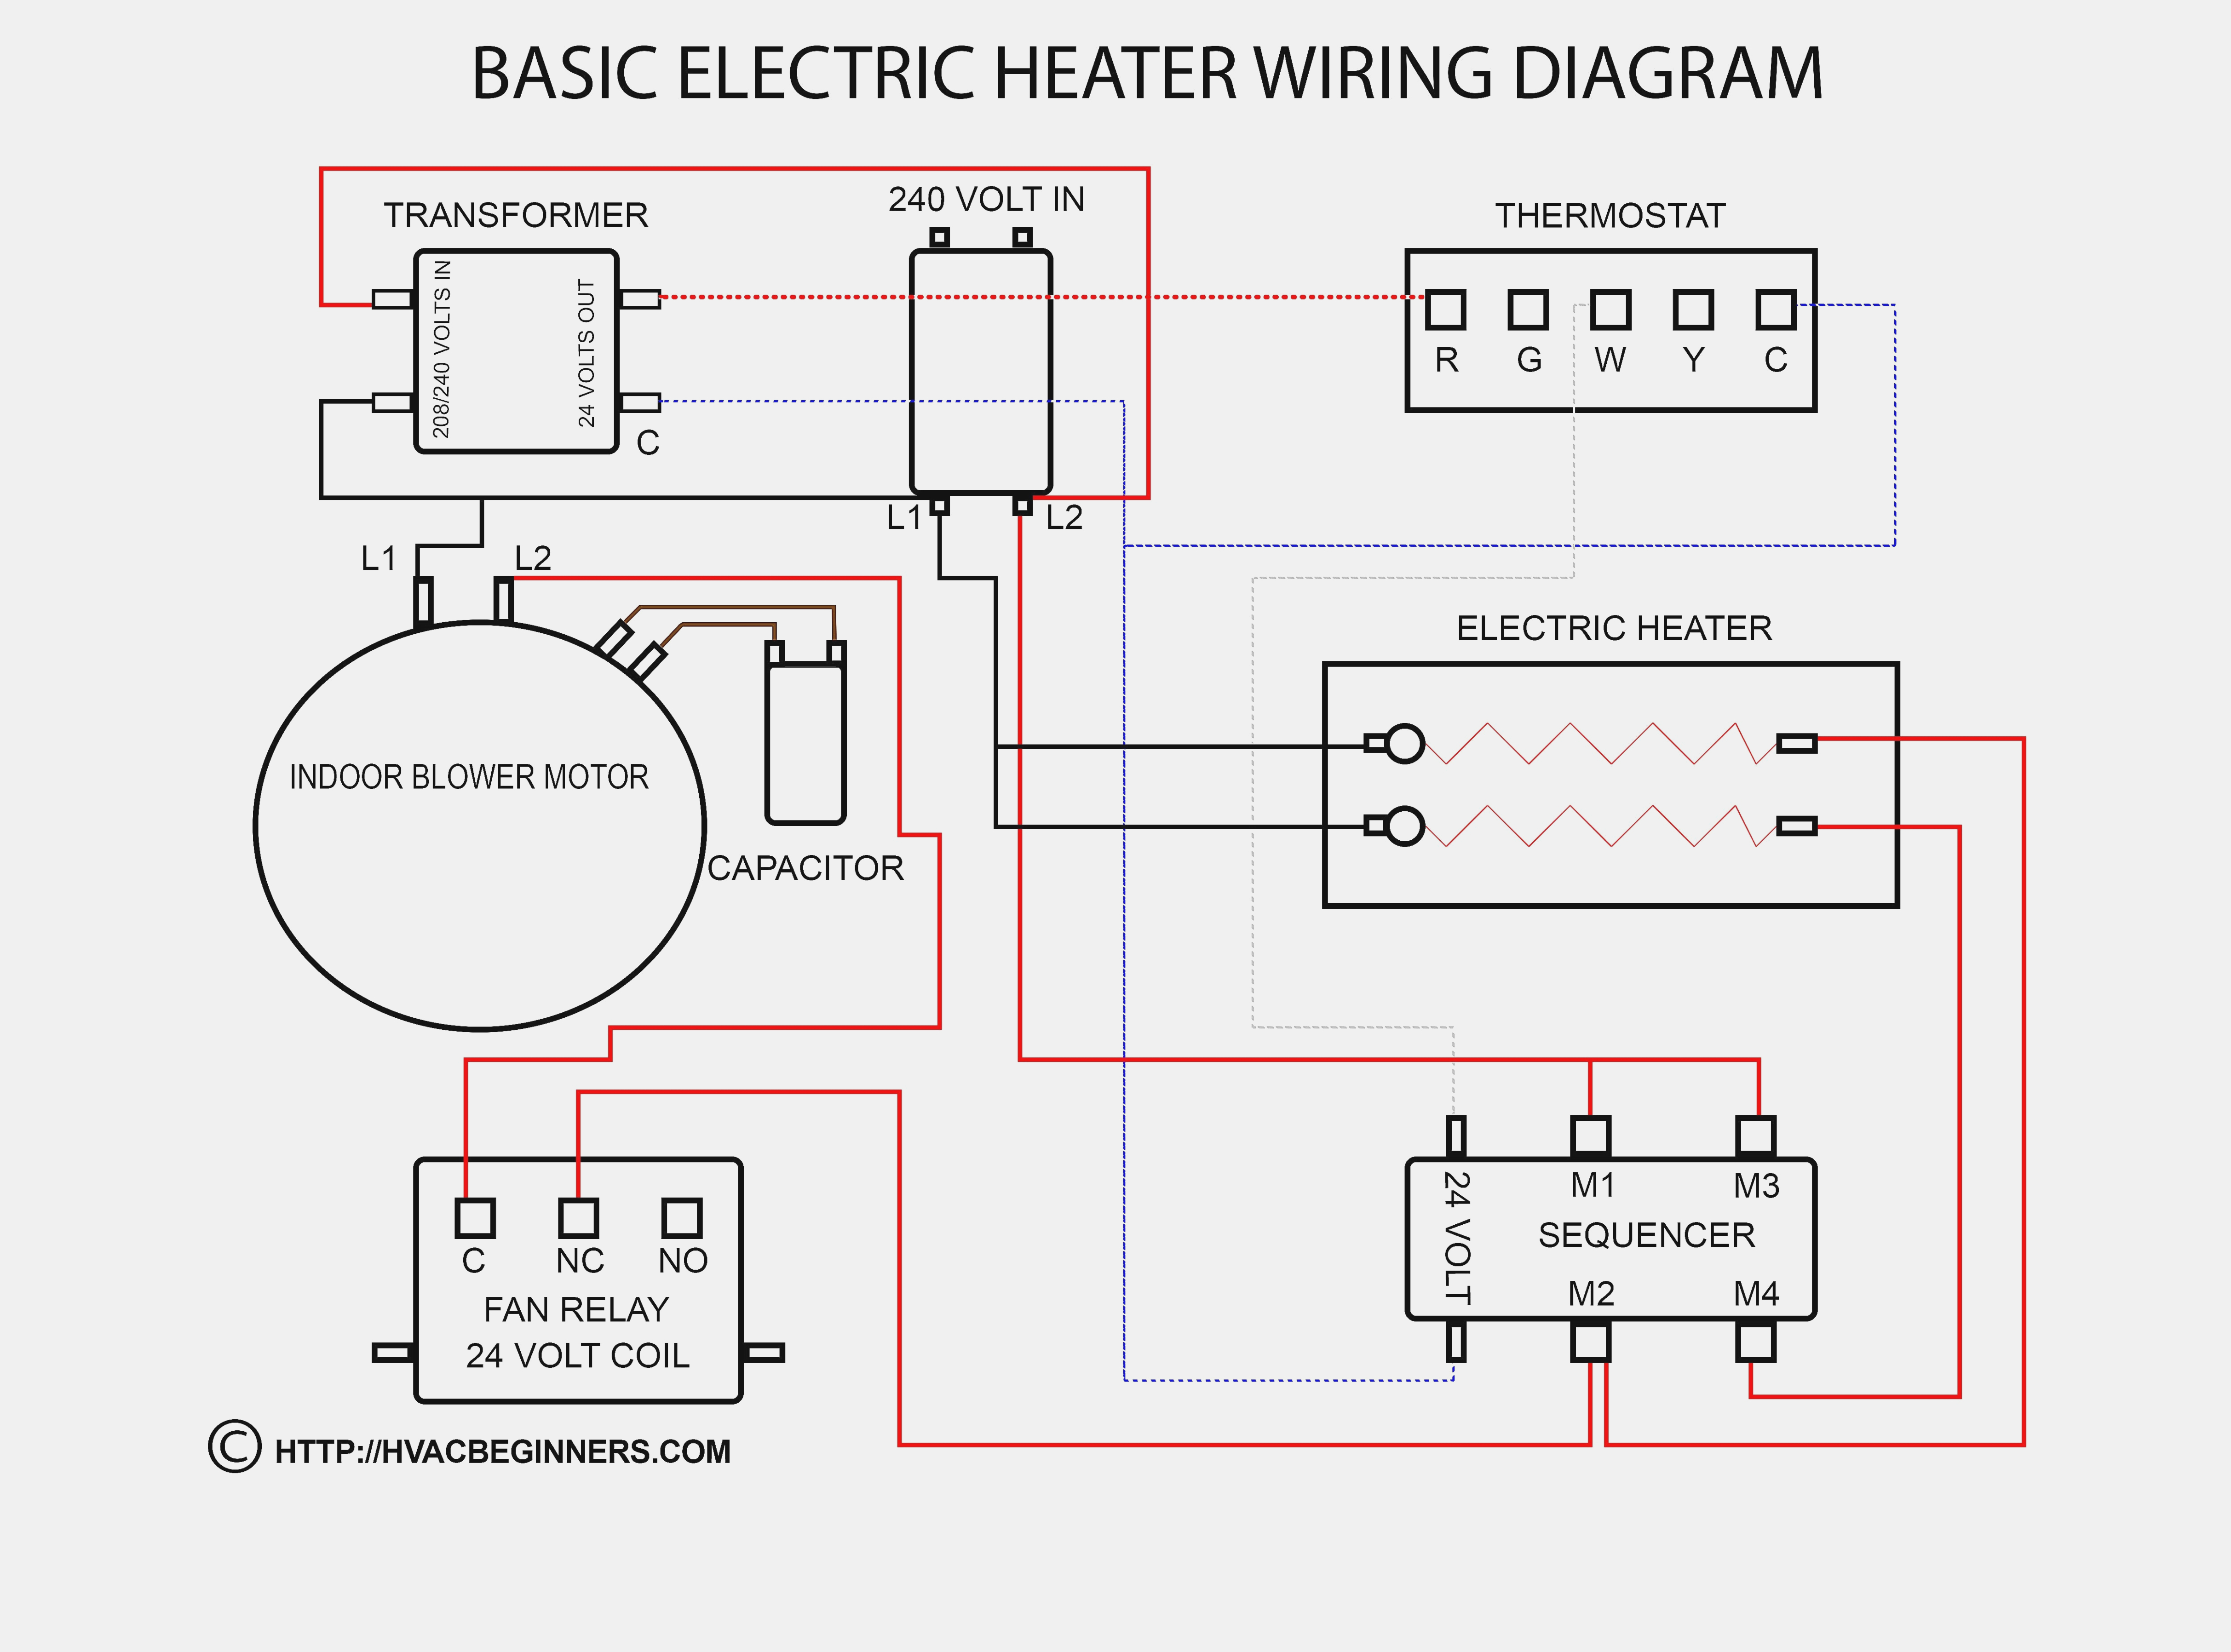 High Efficiency Furnace Venting Diagram Bryant Furnace Wiring Diagram Wiring Diagram Review